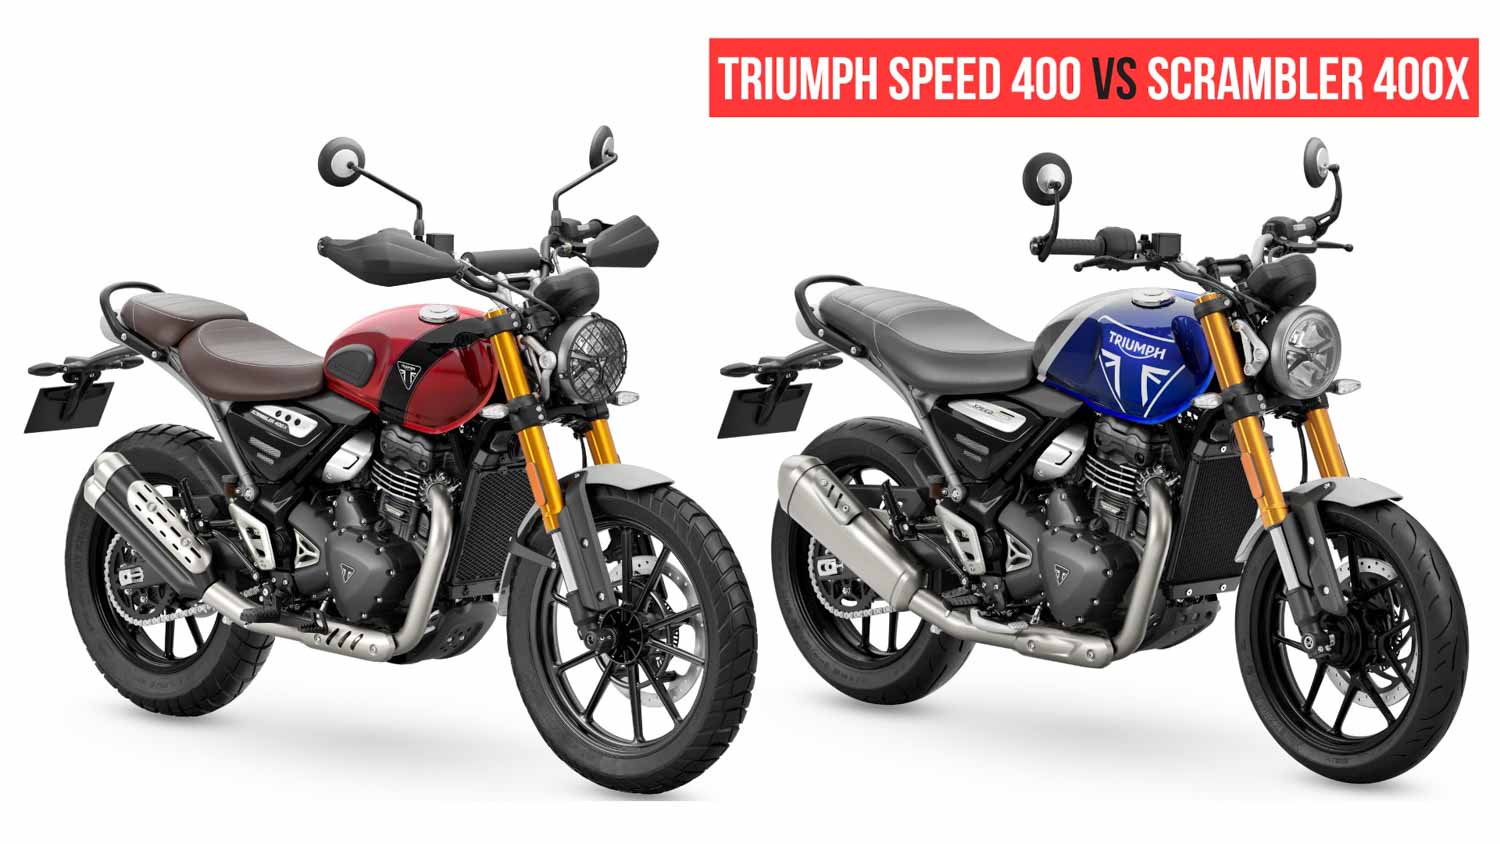 Triumph Speed 400 VS Scrambler 400X: Key Differences